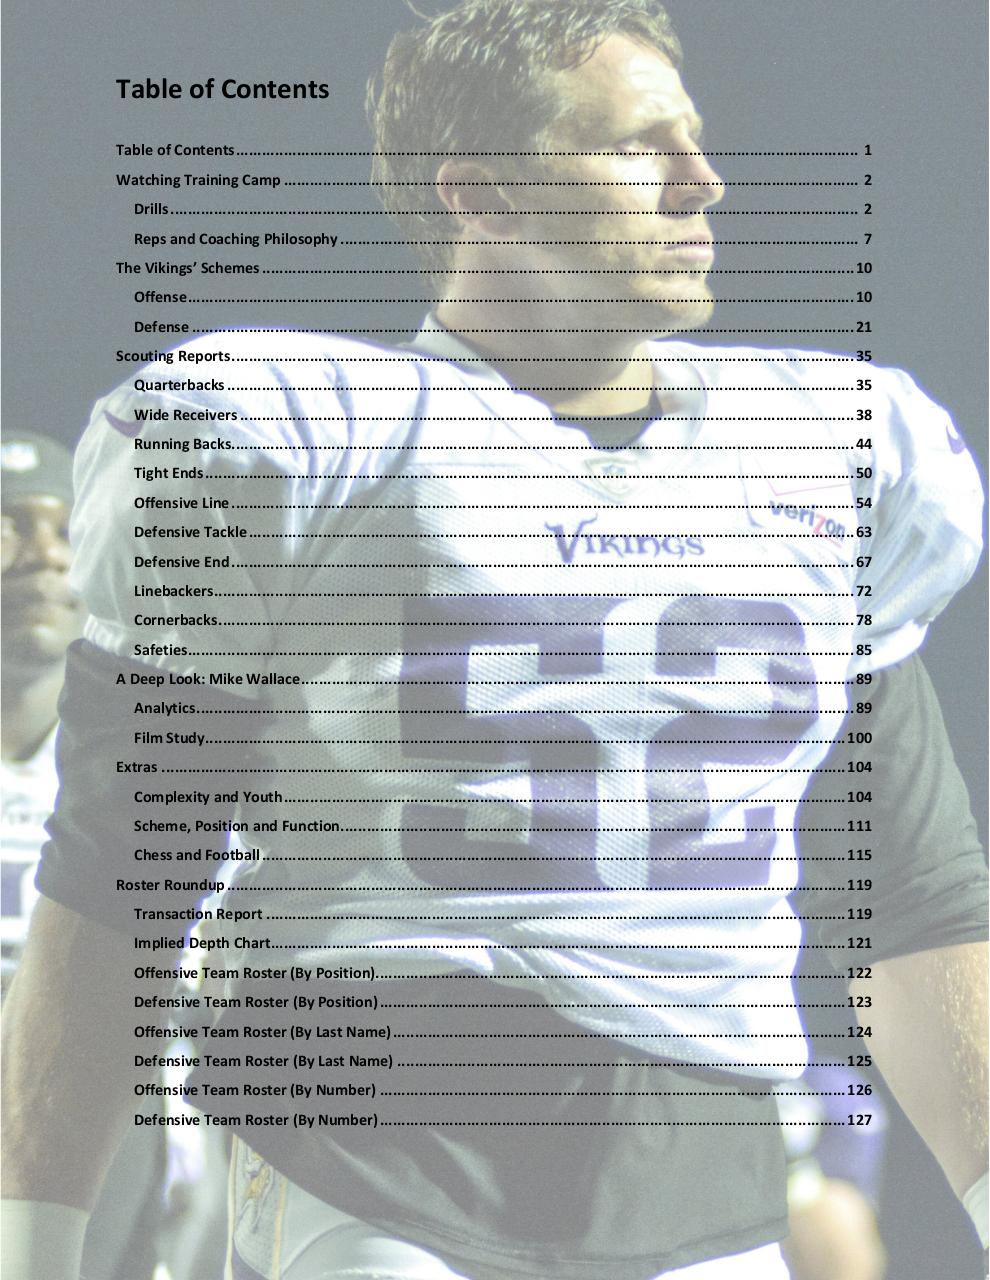 2015 Minnesota Vikings Training Camp Guide (Sample).pdf - page 2/10